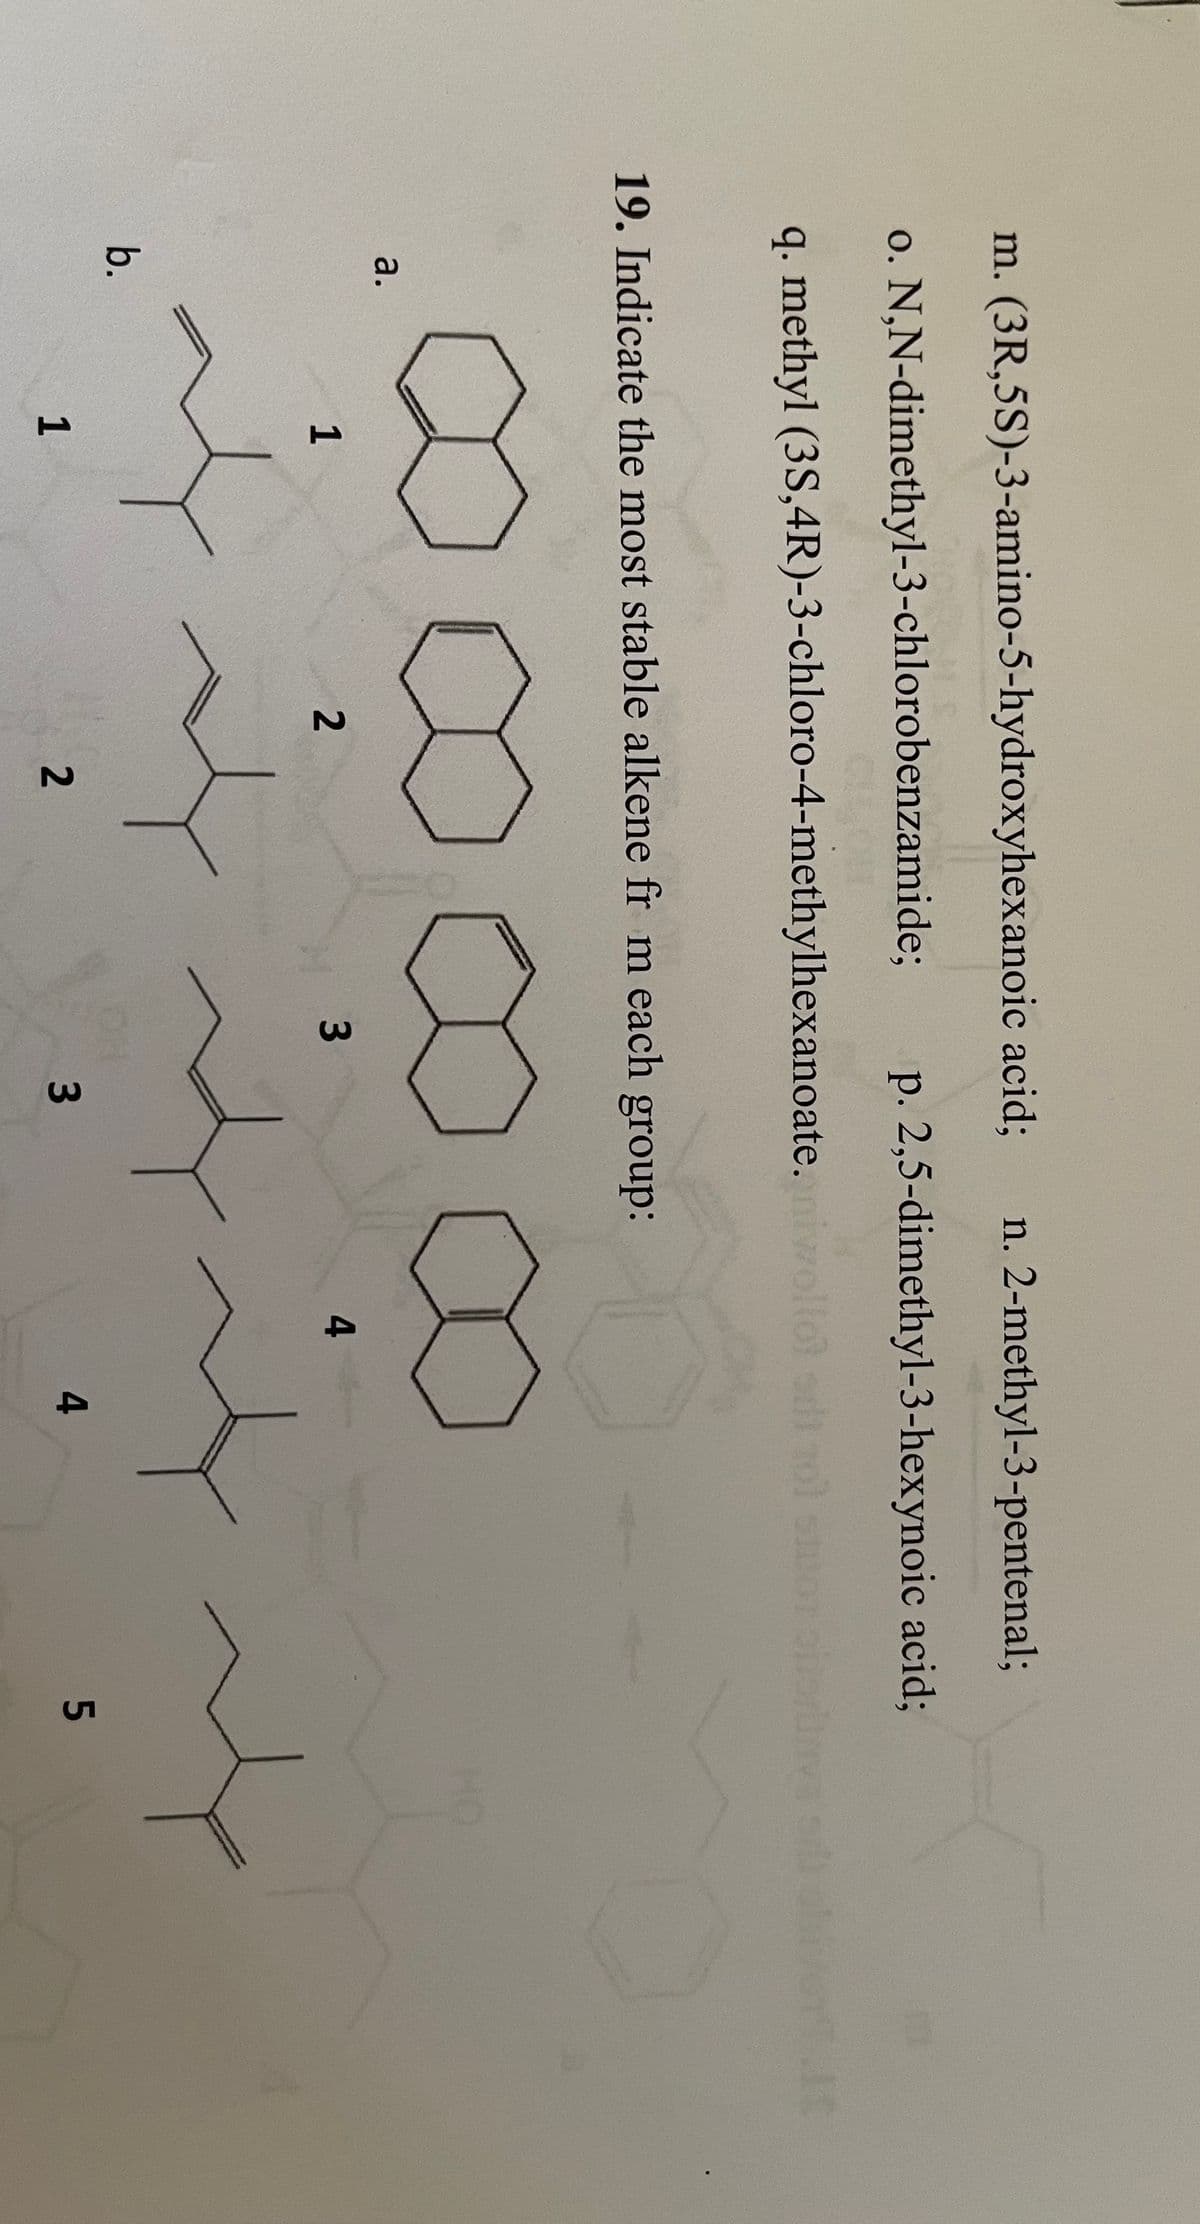 m. (3R,5S)-3-amino-5-hydroxyhexanoic acid;
n. 2-methyl-3-pentenal;
o. N,N-dimethyl-3-chlorobenzamide;
p. 2,5-dimethyl-3-hexynoic acid;
q. methyl (3S,4R)-3-chloro-4-methylhexanoate.niwll
19. Indicate the most stable alkene fr m each group:
a.
1
2
4
b.
OH
3
1
4
